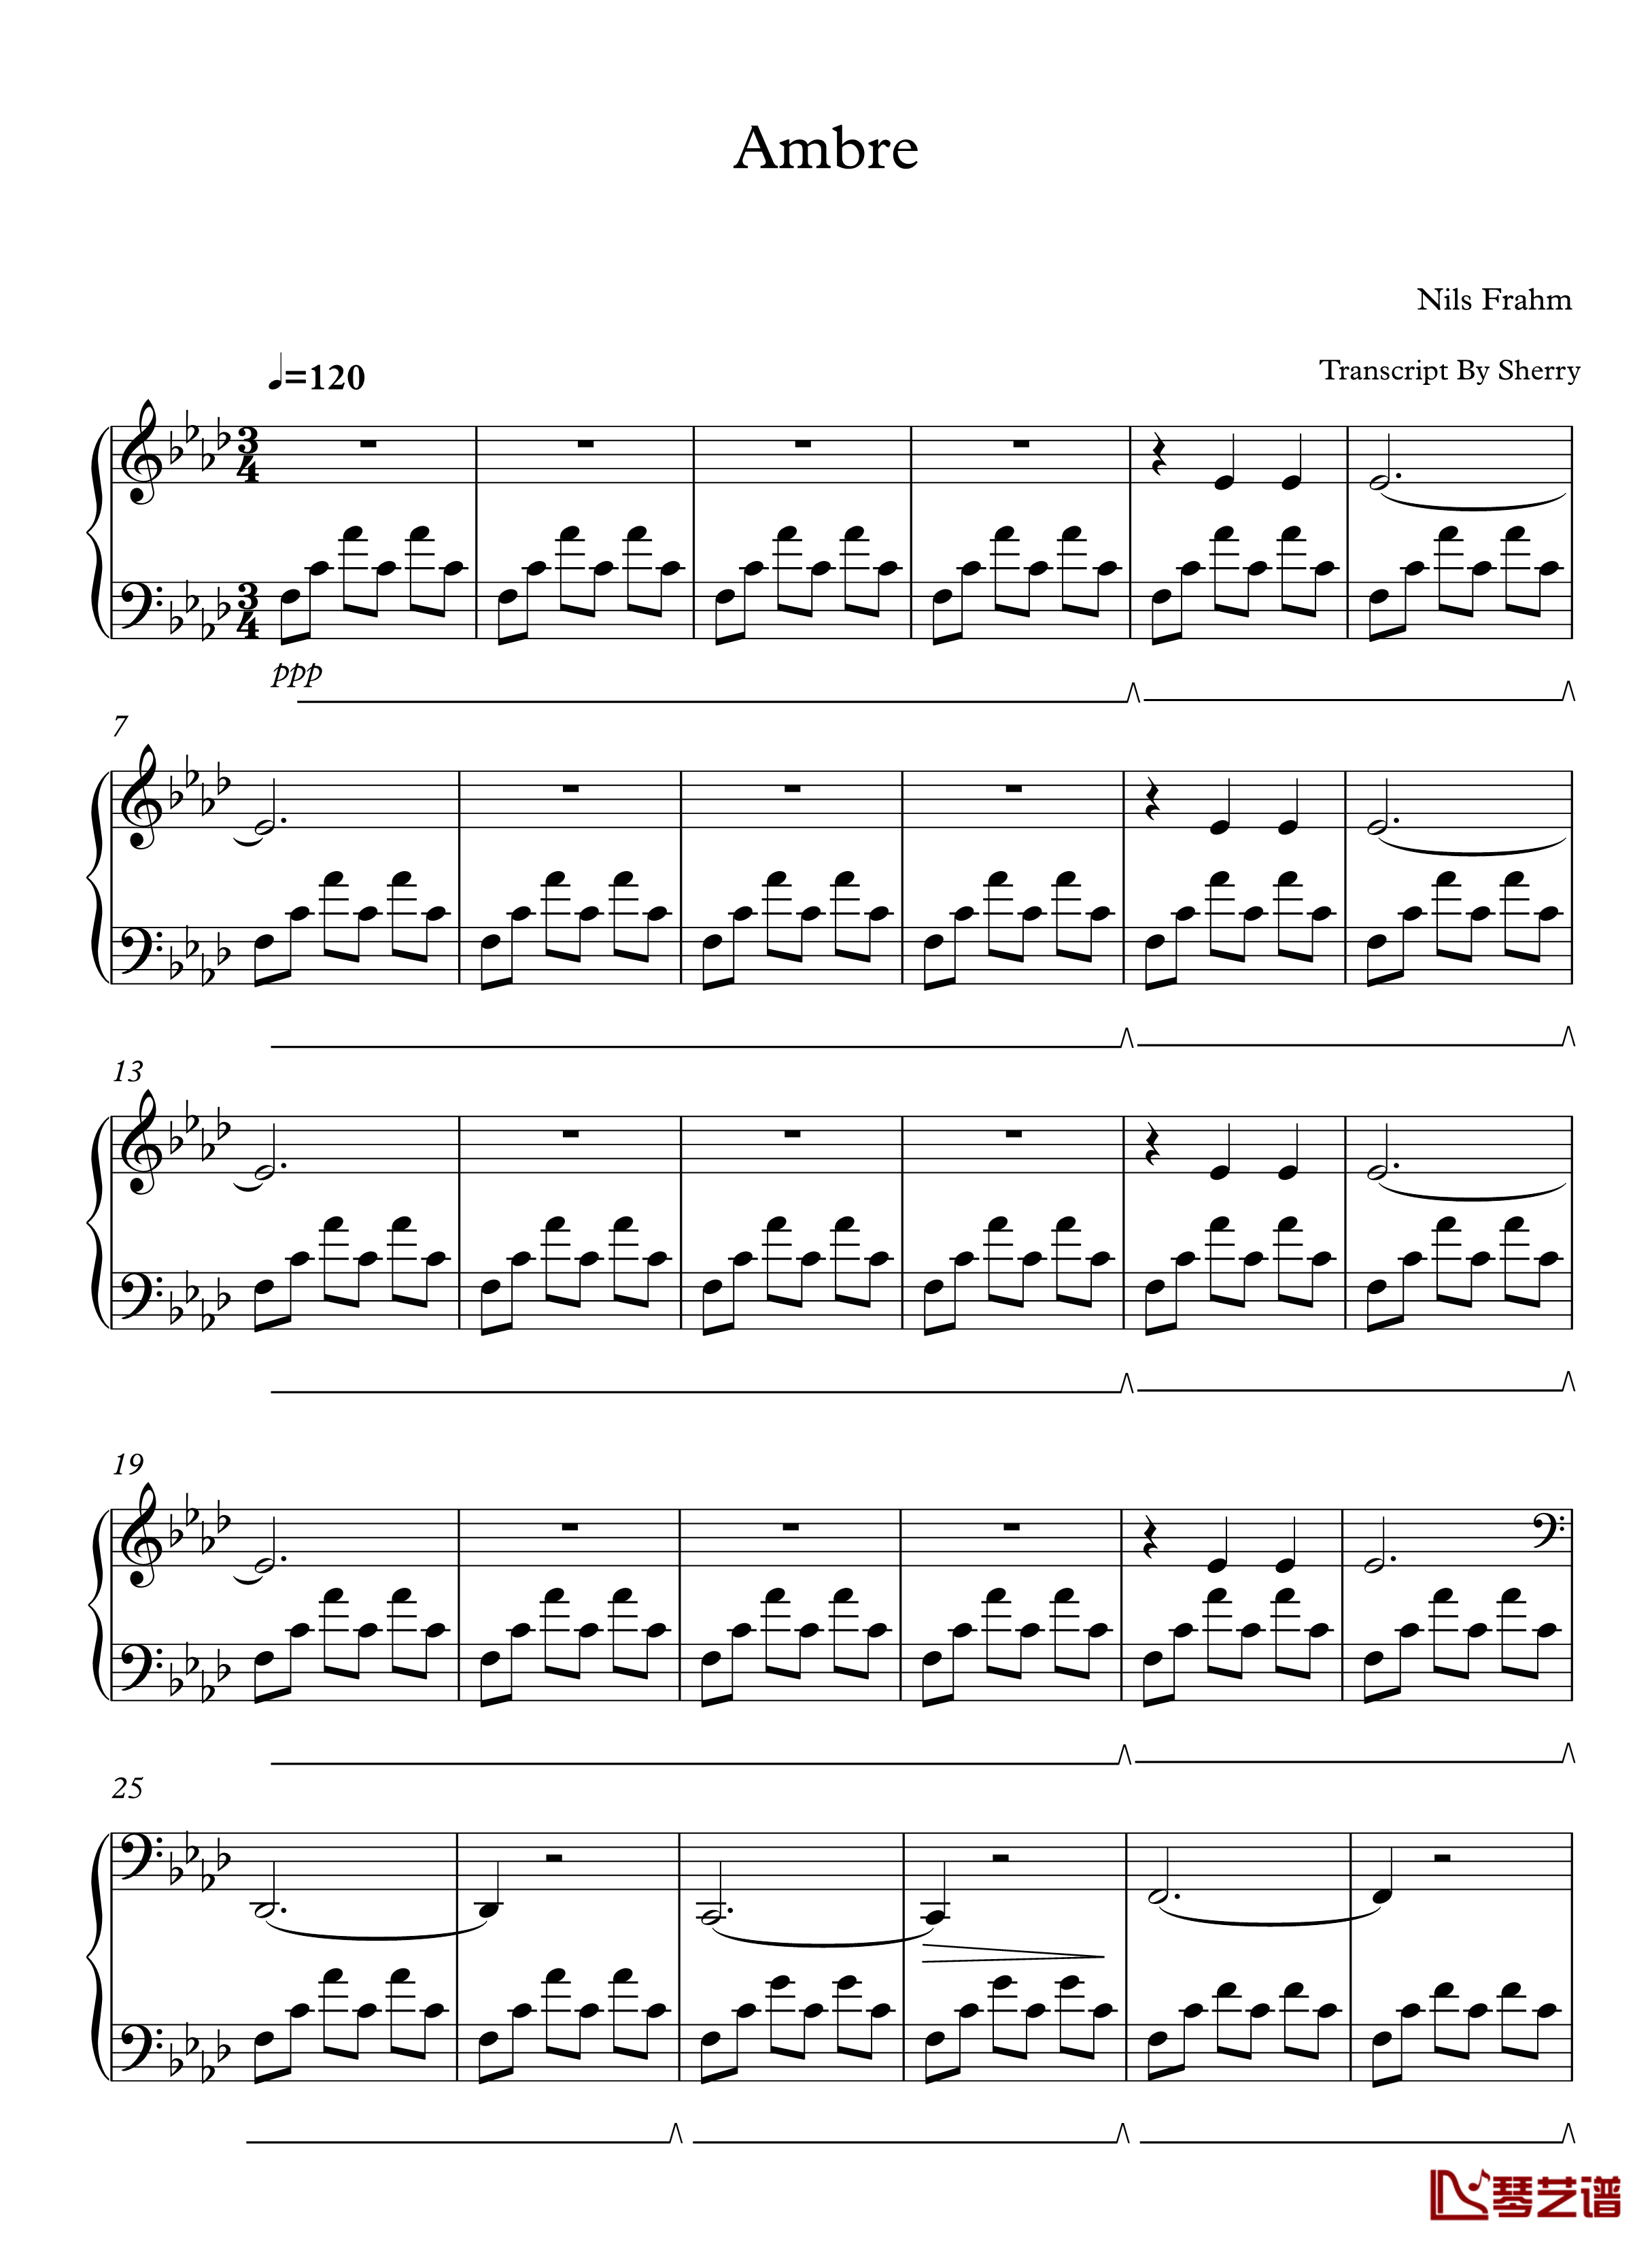 Ambre钢琴谱-尼尔斯-弗拉姆1